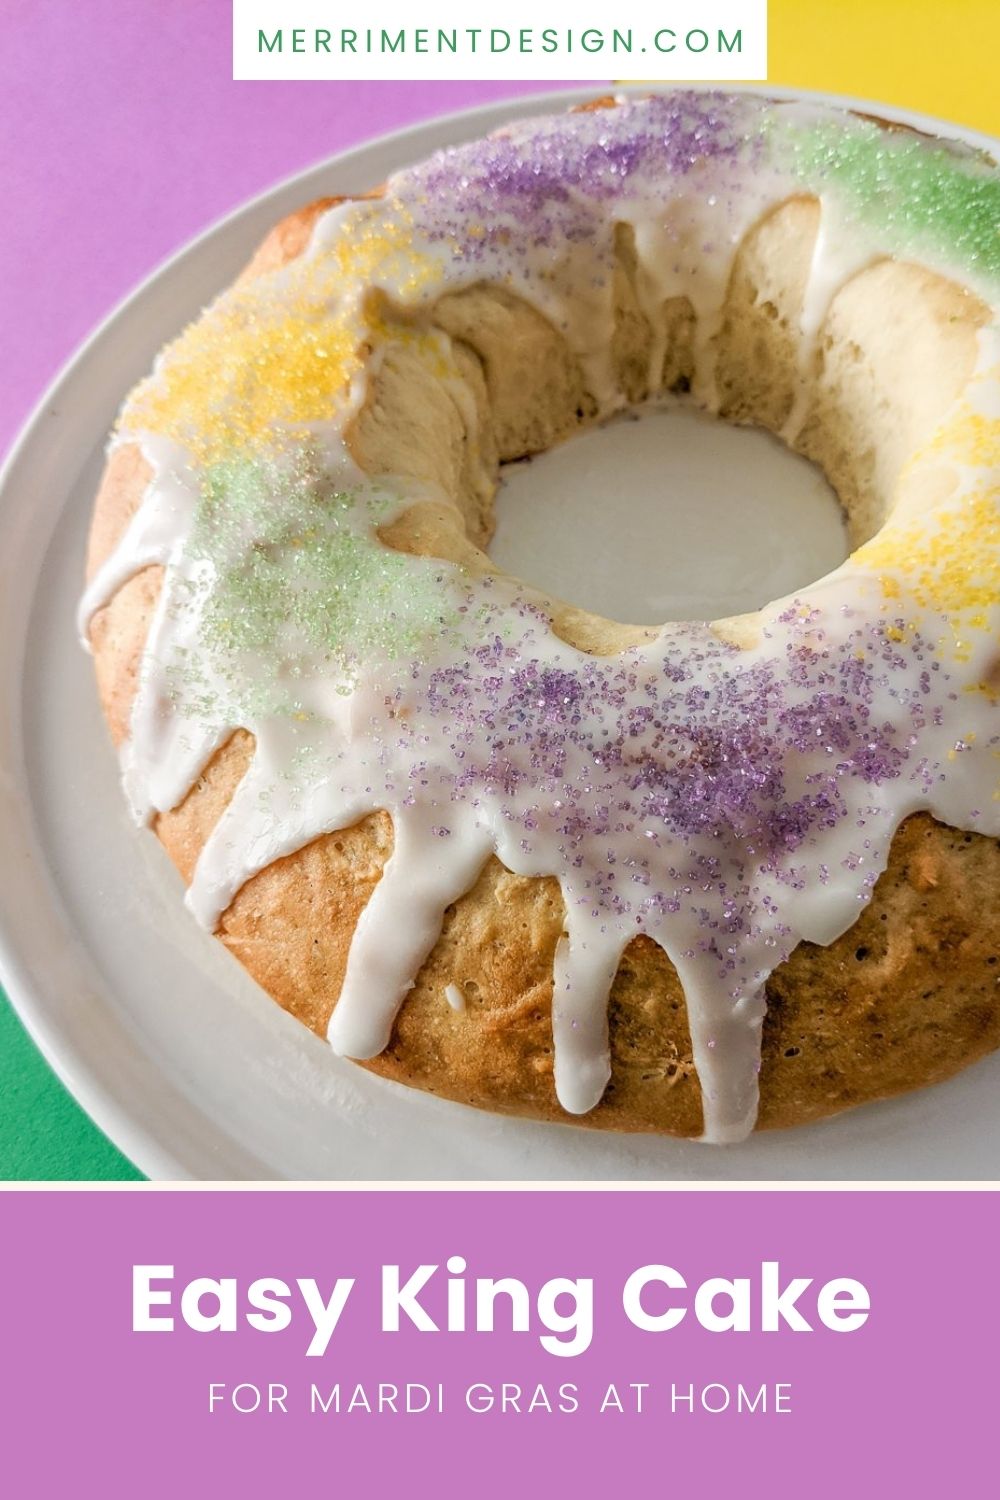 Easy King cake recipe for Mardi Gras